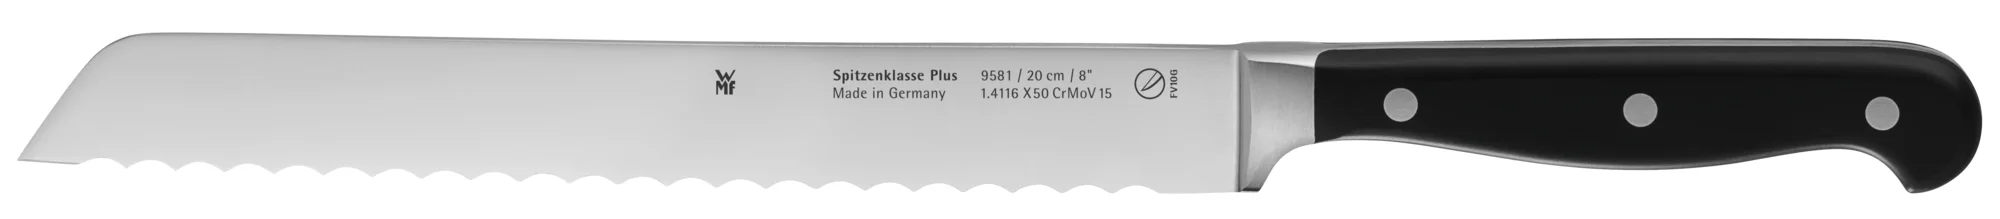 Spitzenklasse Plus Нож для хлеба 31.5см WMF